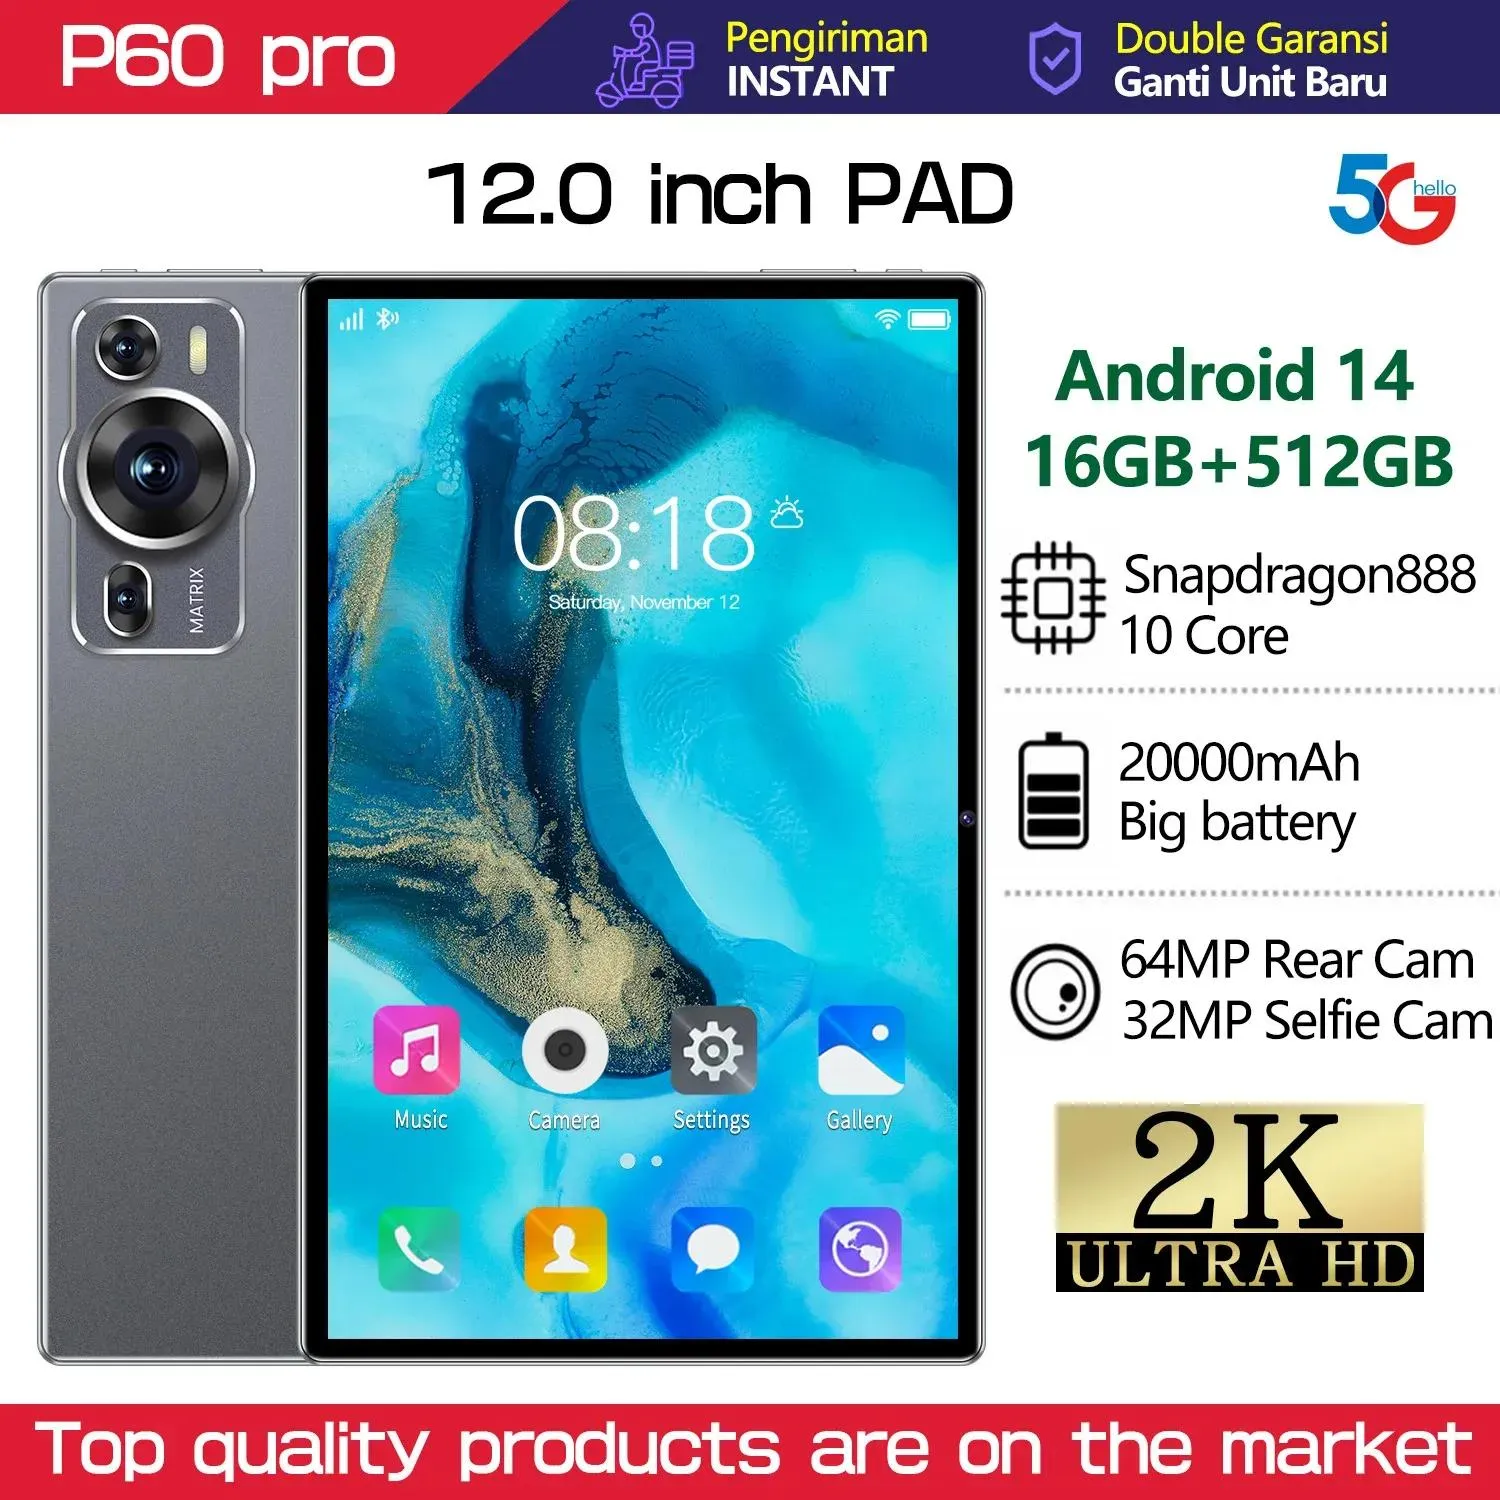 PC Brand Touch Tablet Android P60 Pro Global Tablette 12.0 بوصة HD 16G+512GB Snapdragon 888 5G بطاقة SIM المزدوجة أو WiFi Google Play